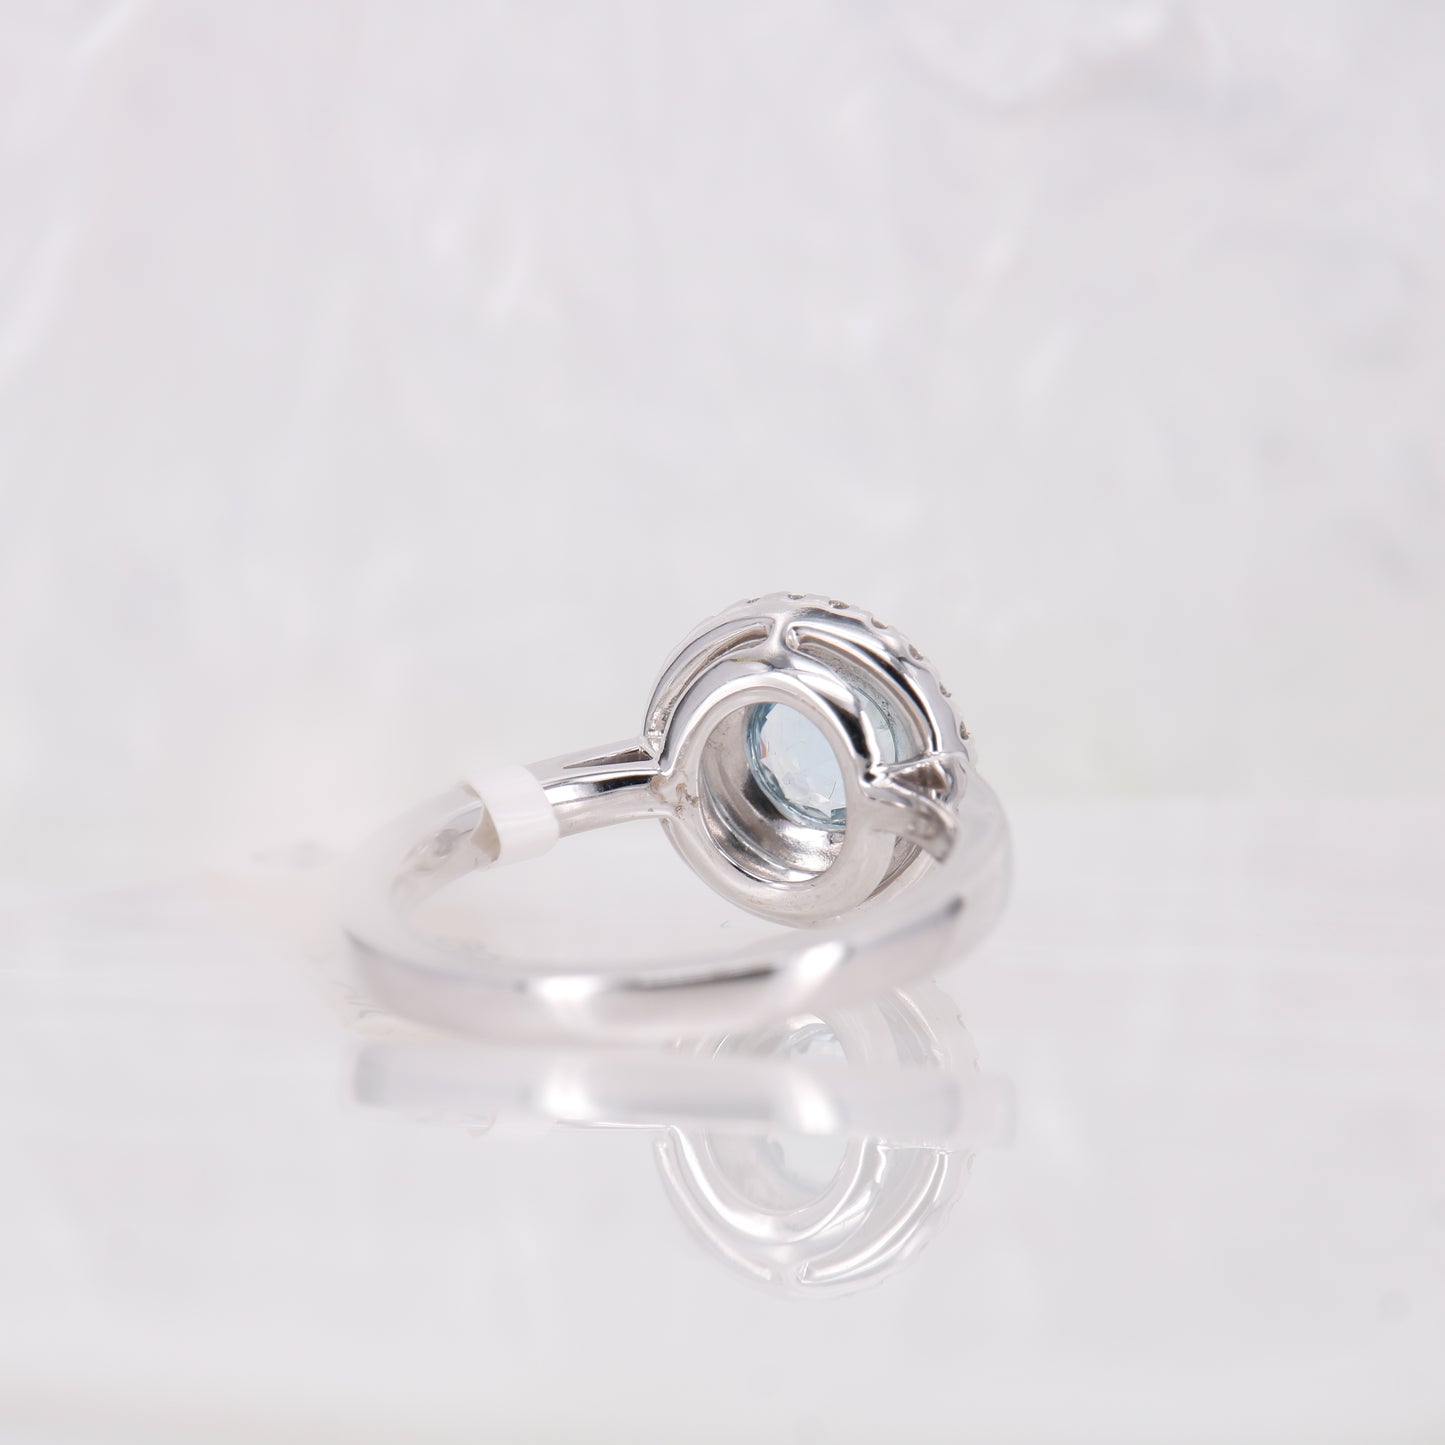 18ct White Gold Aquamarine and Diamond Ring. 0.78ct aquamarine and a double halo of diamonds. 